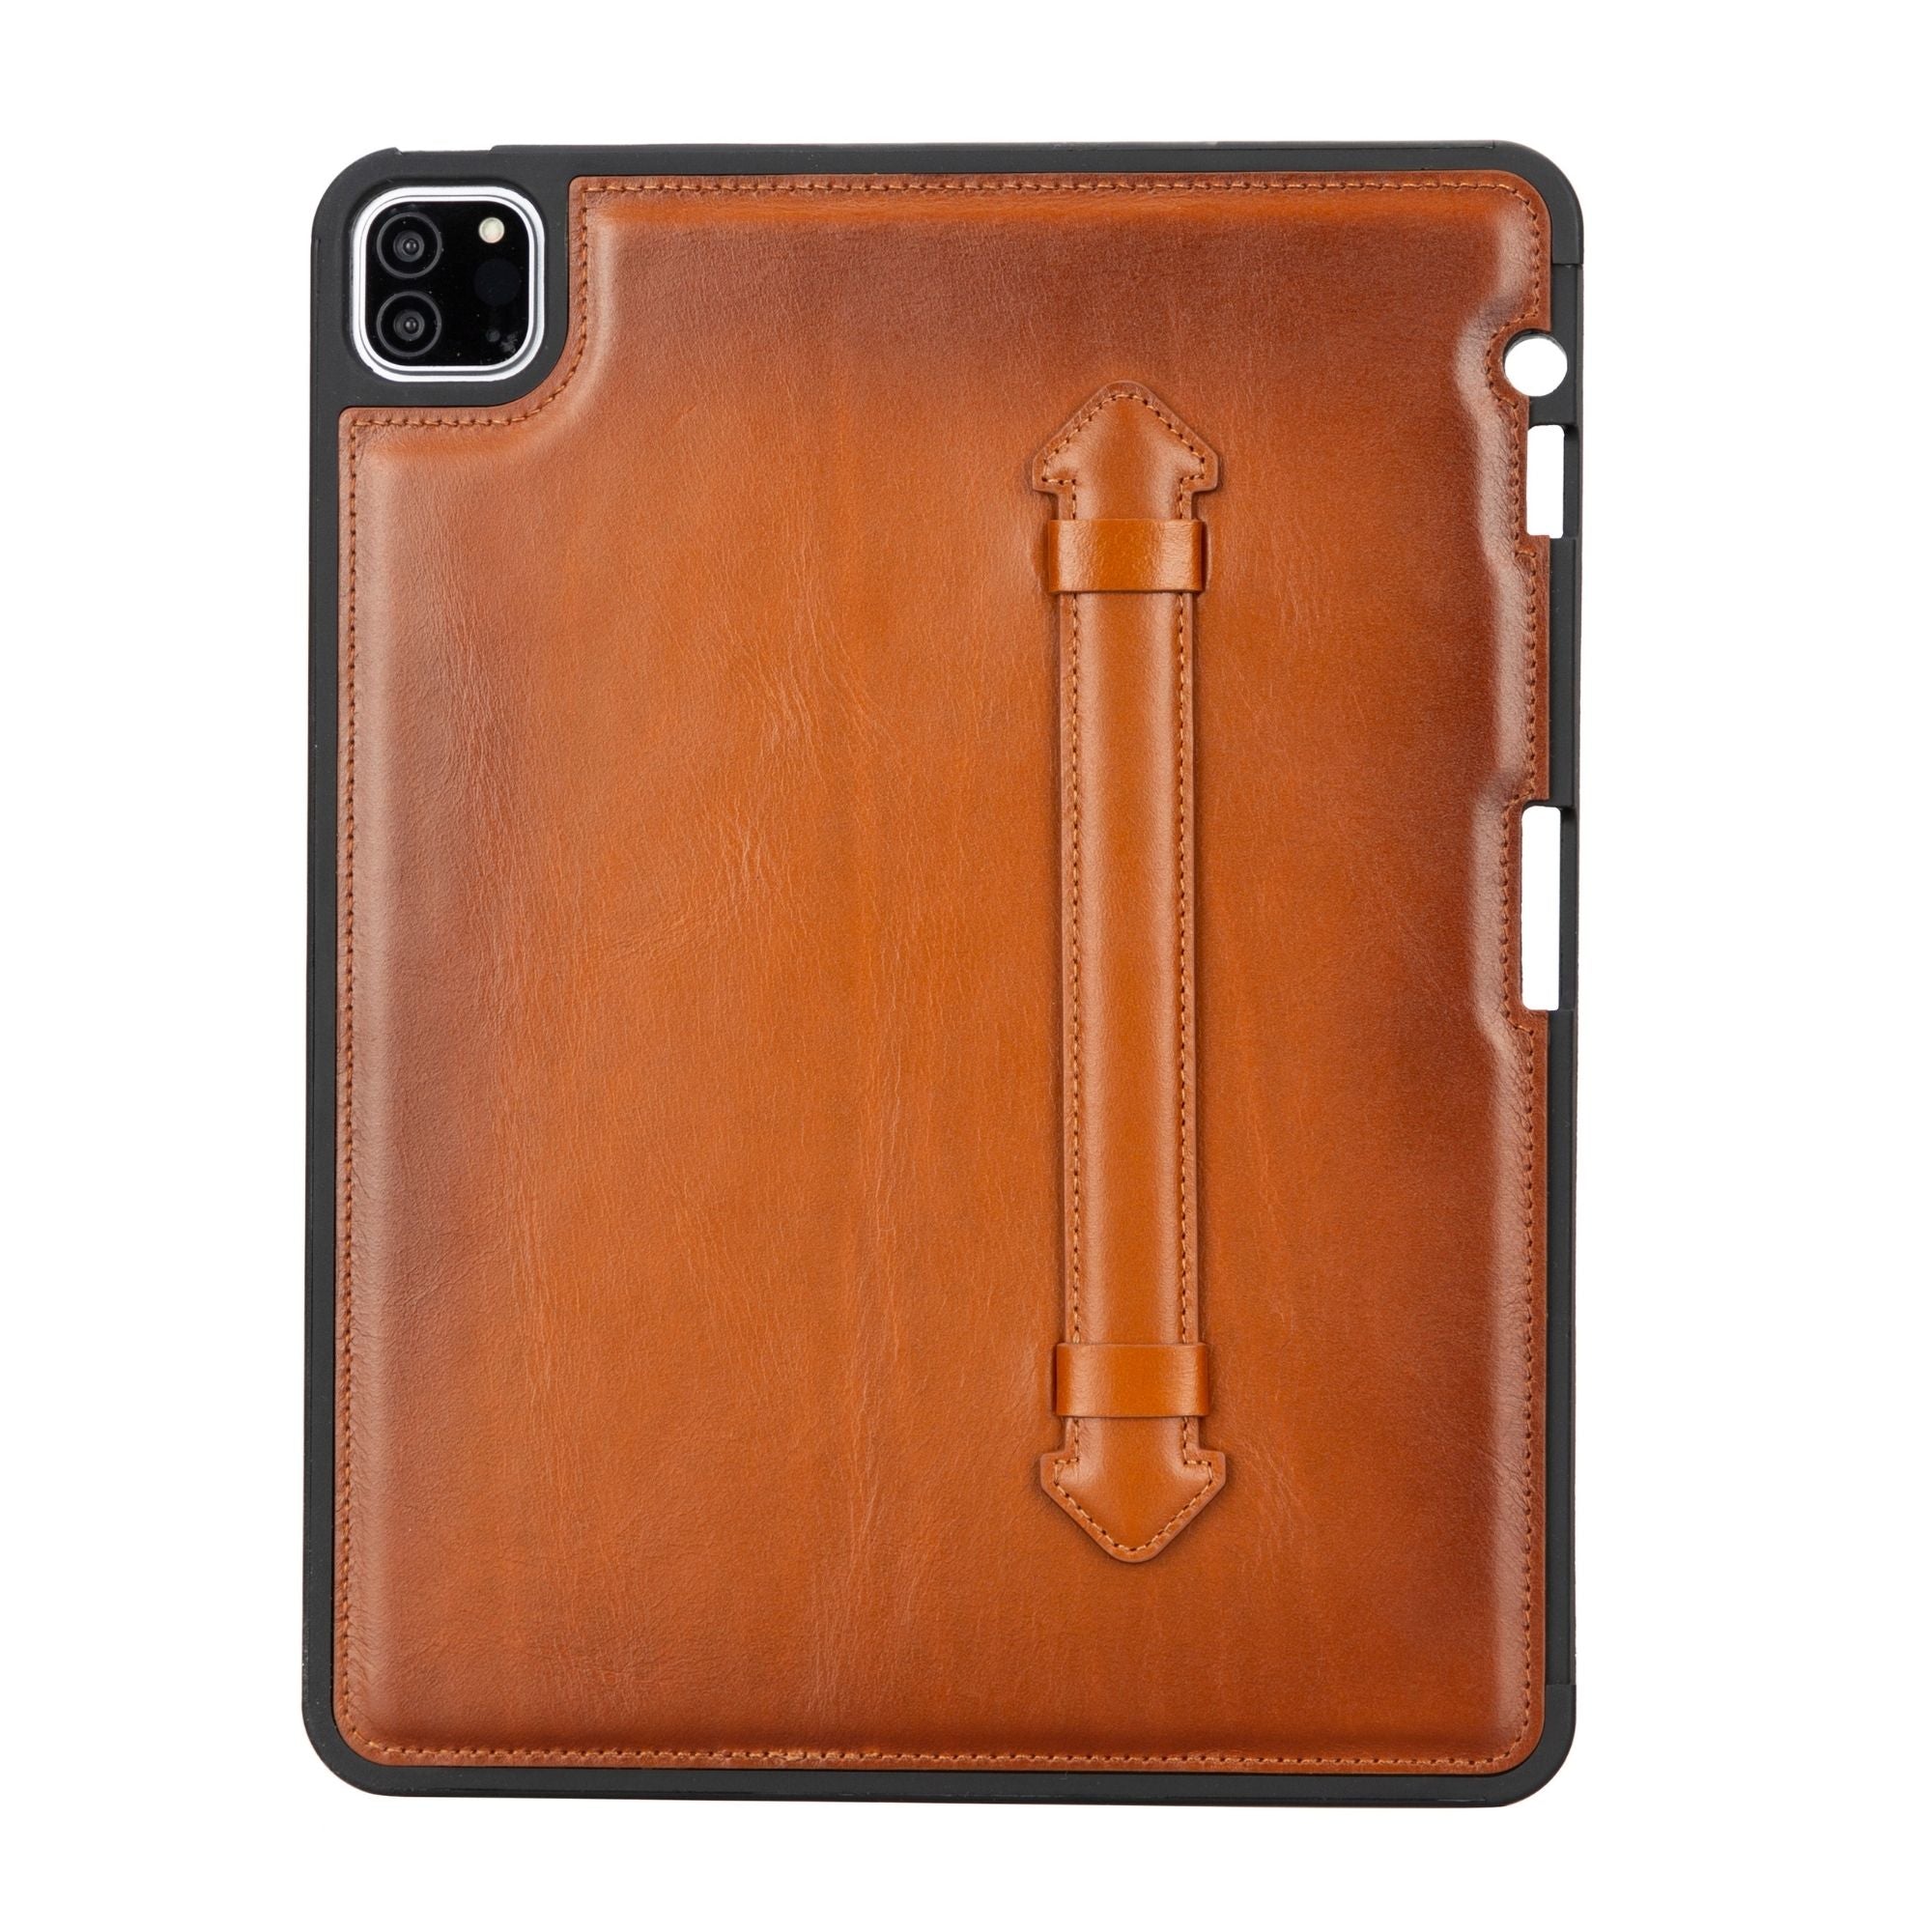 Cocones  Mini Folio, wool and leather case for iPad Mini, Kindle - smokey  grey / tan